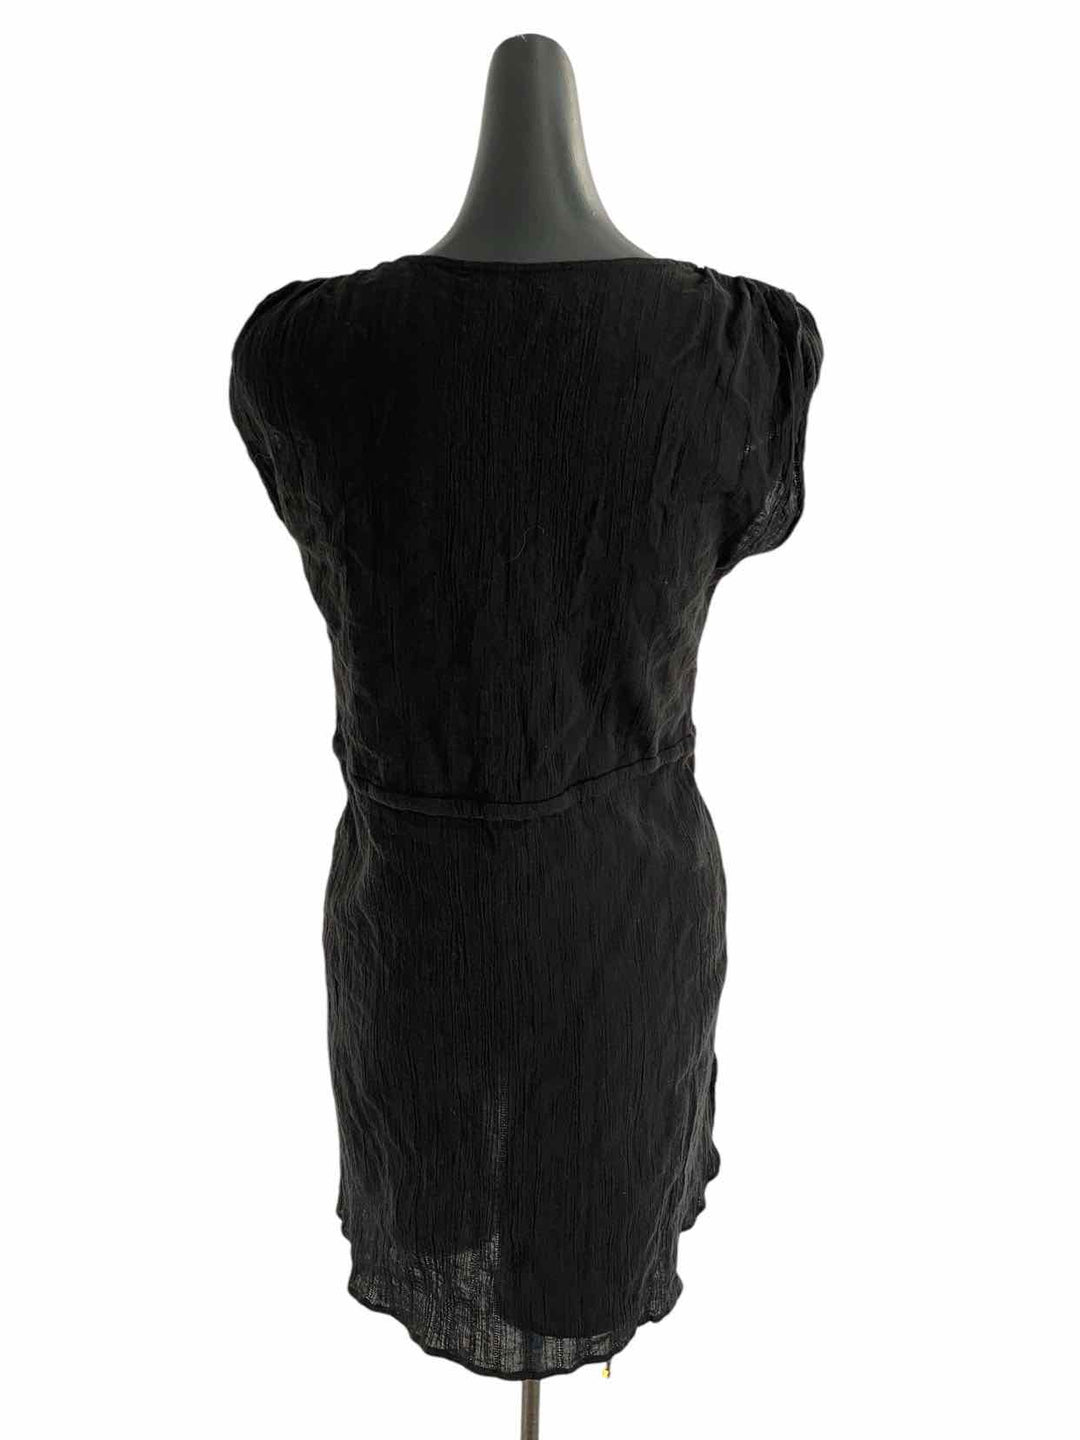 Vix Paulahermanny Size SP Black Dress